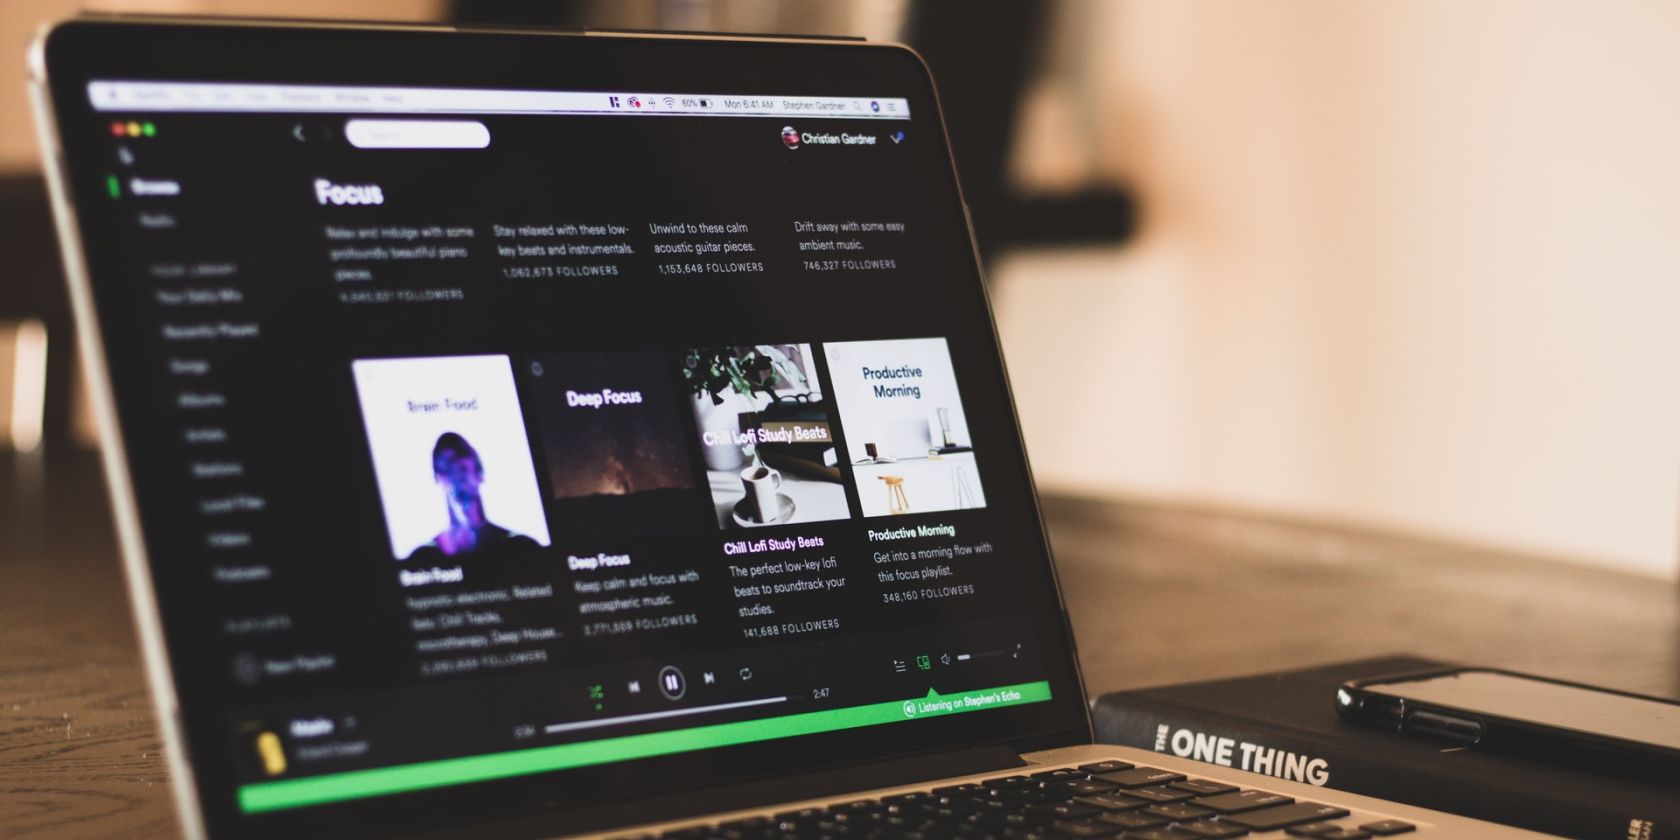 Spotify app running on a laptop